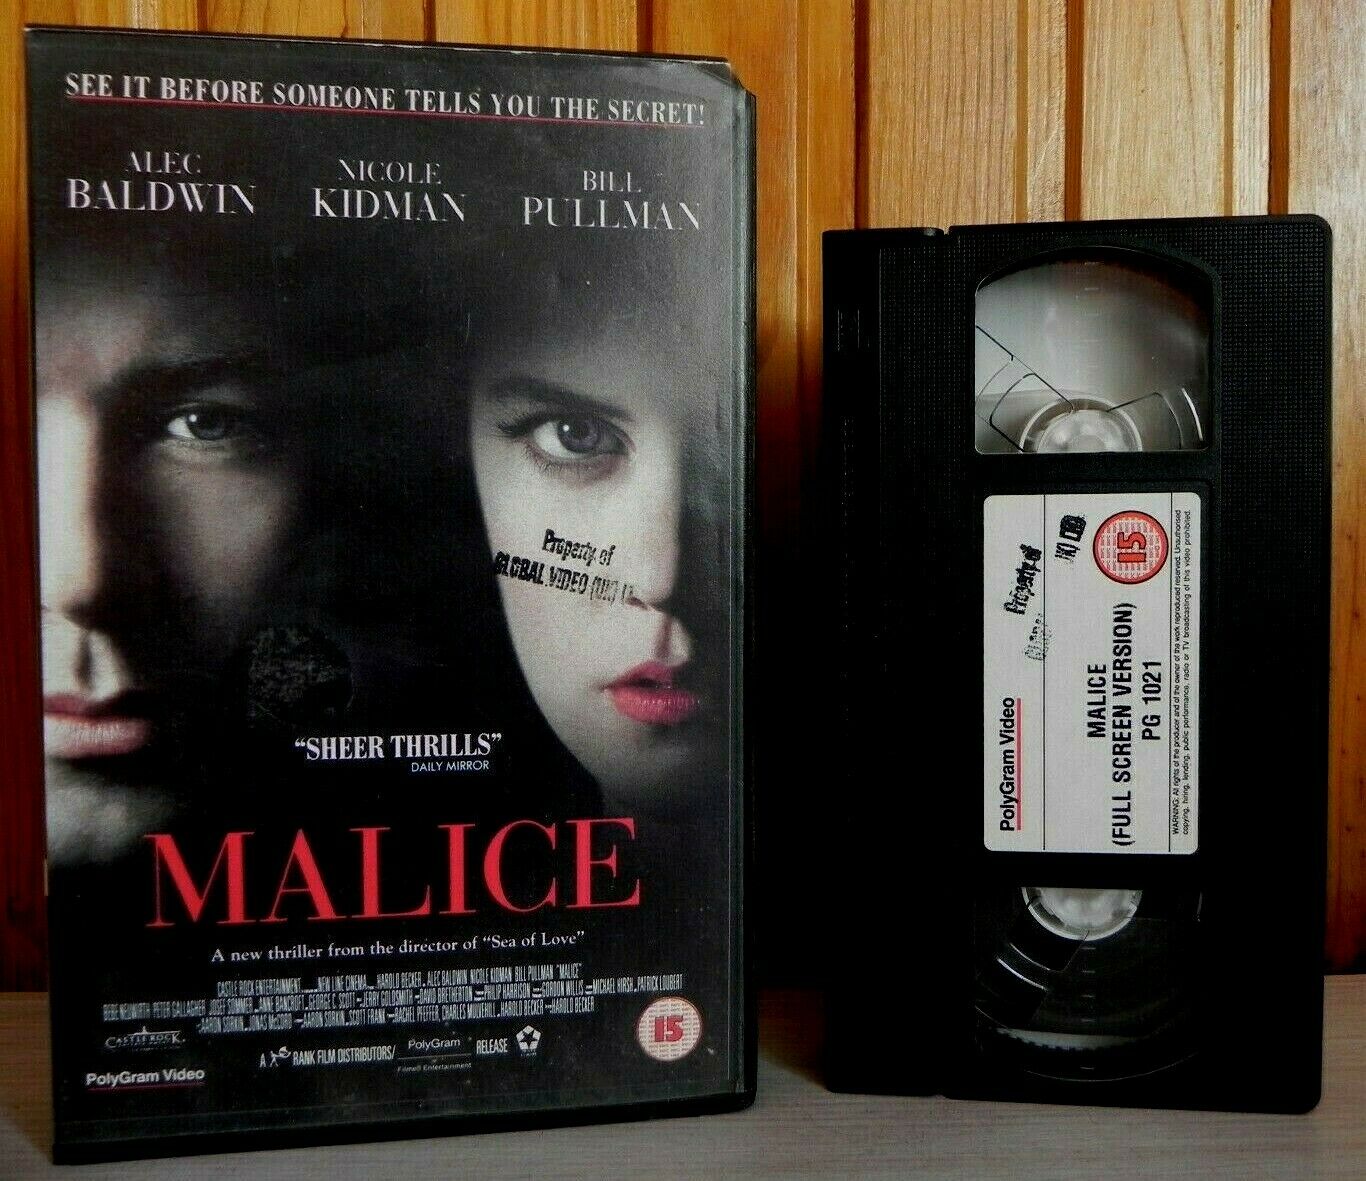 Malice - Full Screen Version - Alec Baldwin - Dark Thriller - Pal Video - VHS-